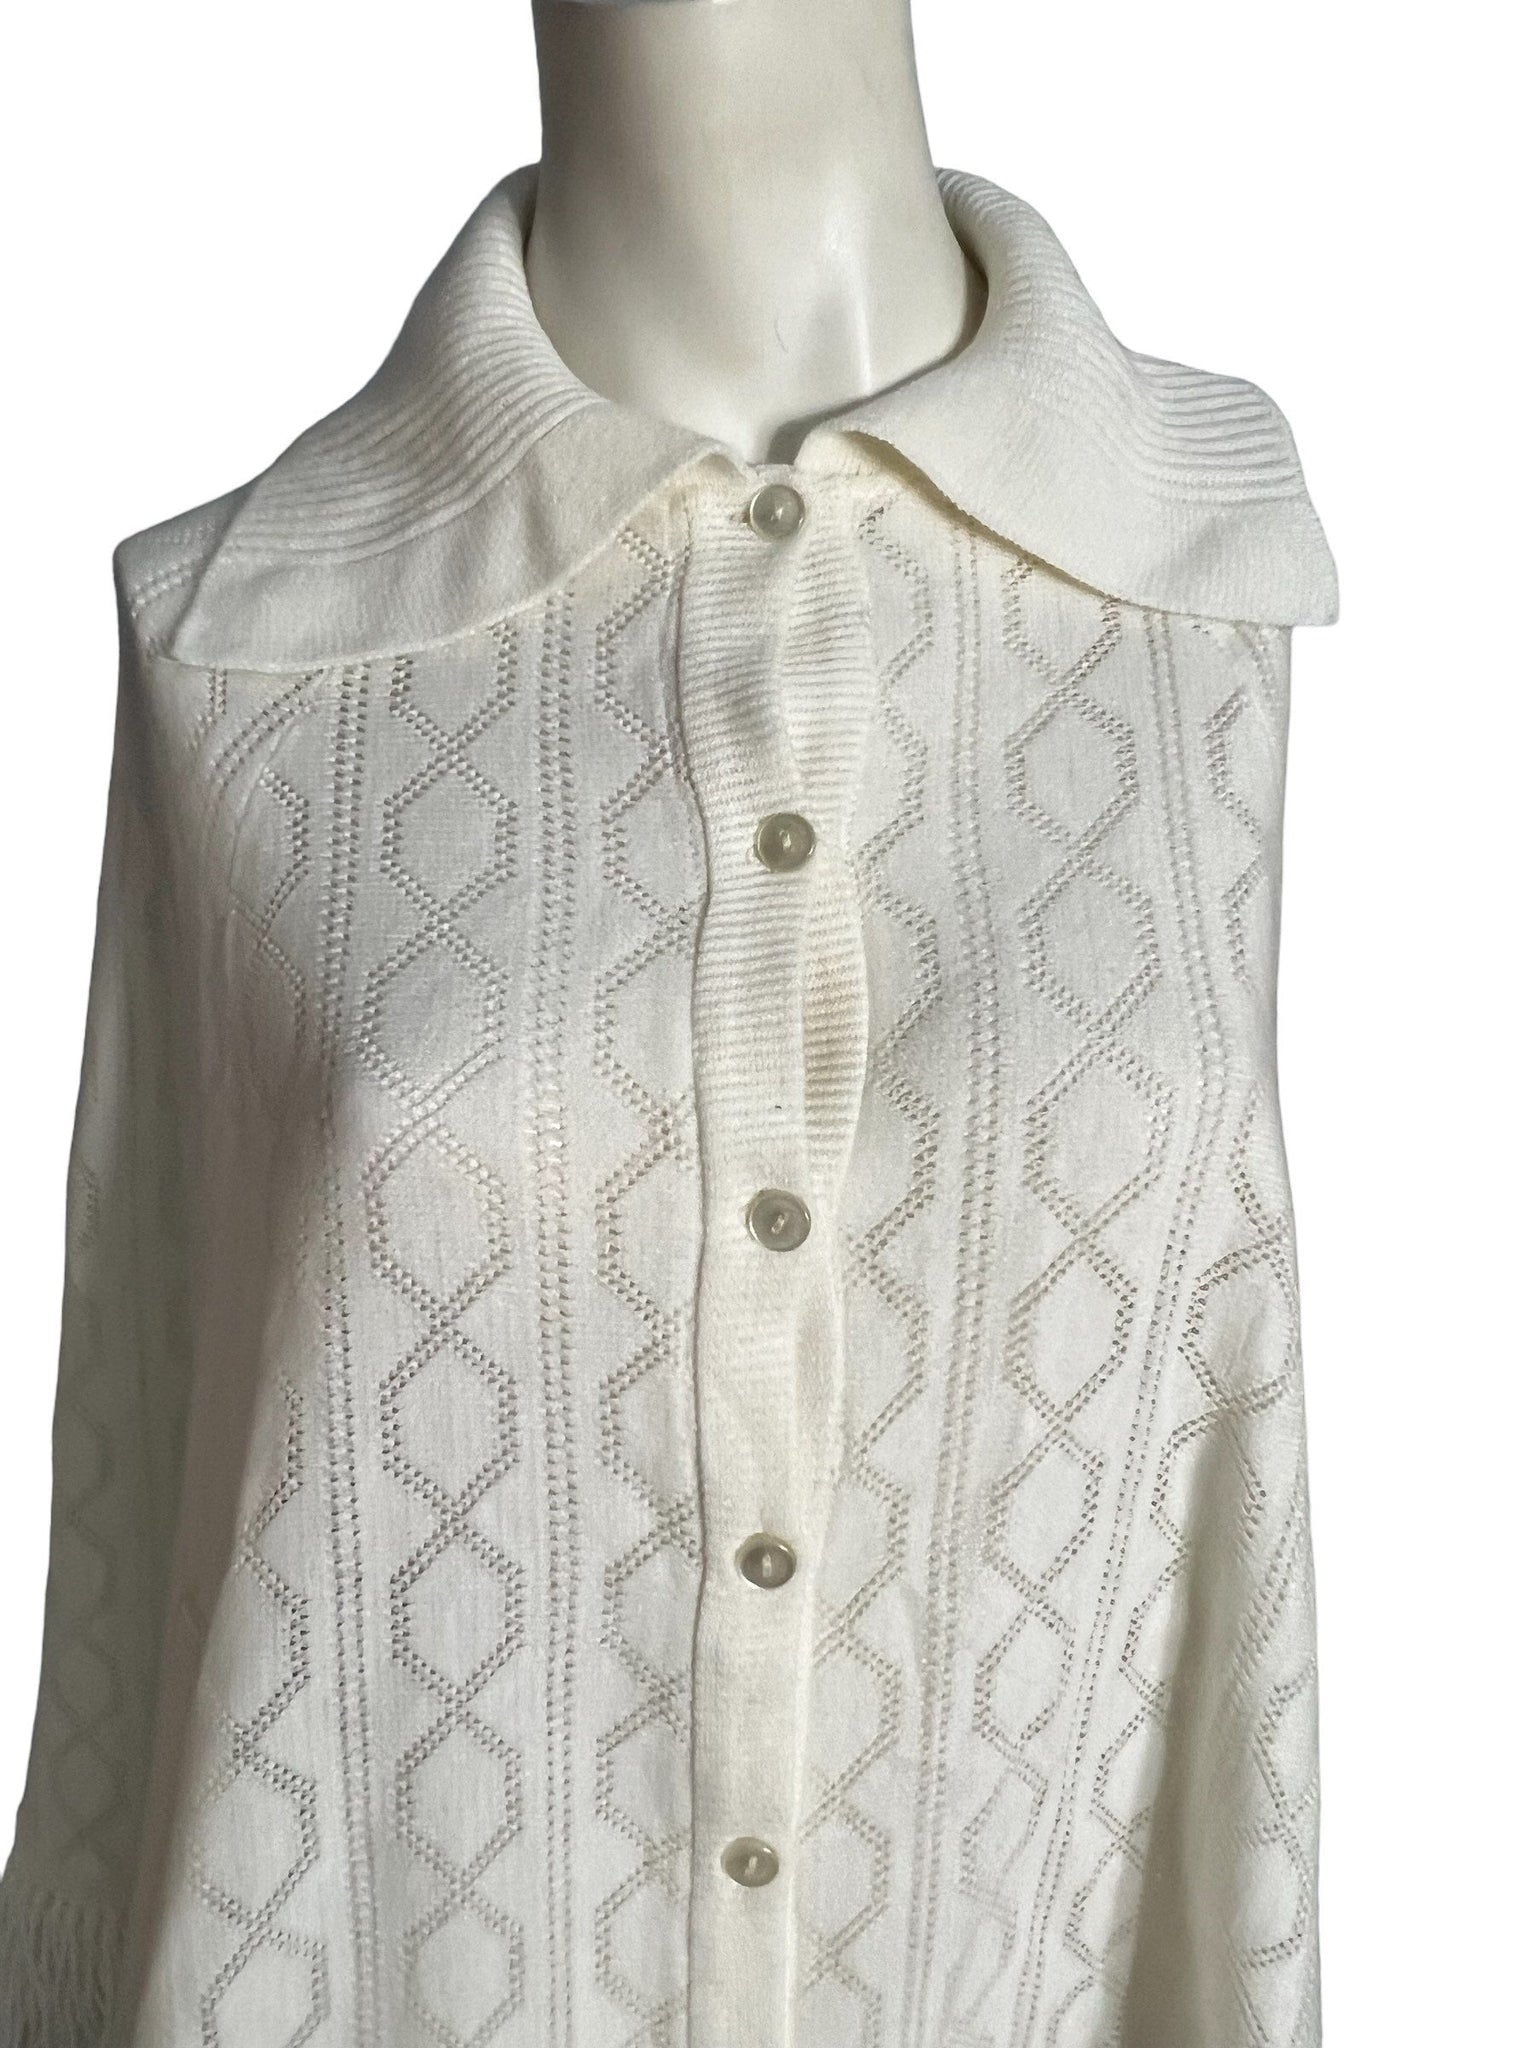 Vintage 70's white sweater shawl poncho